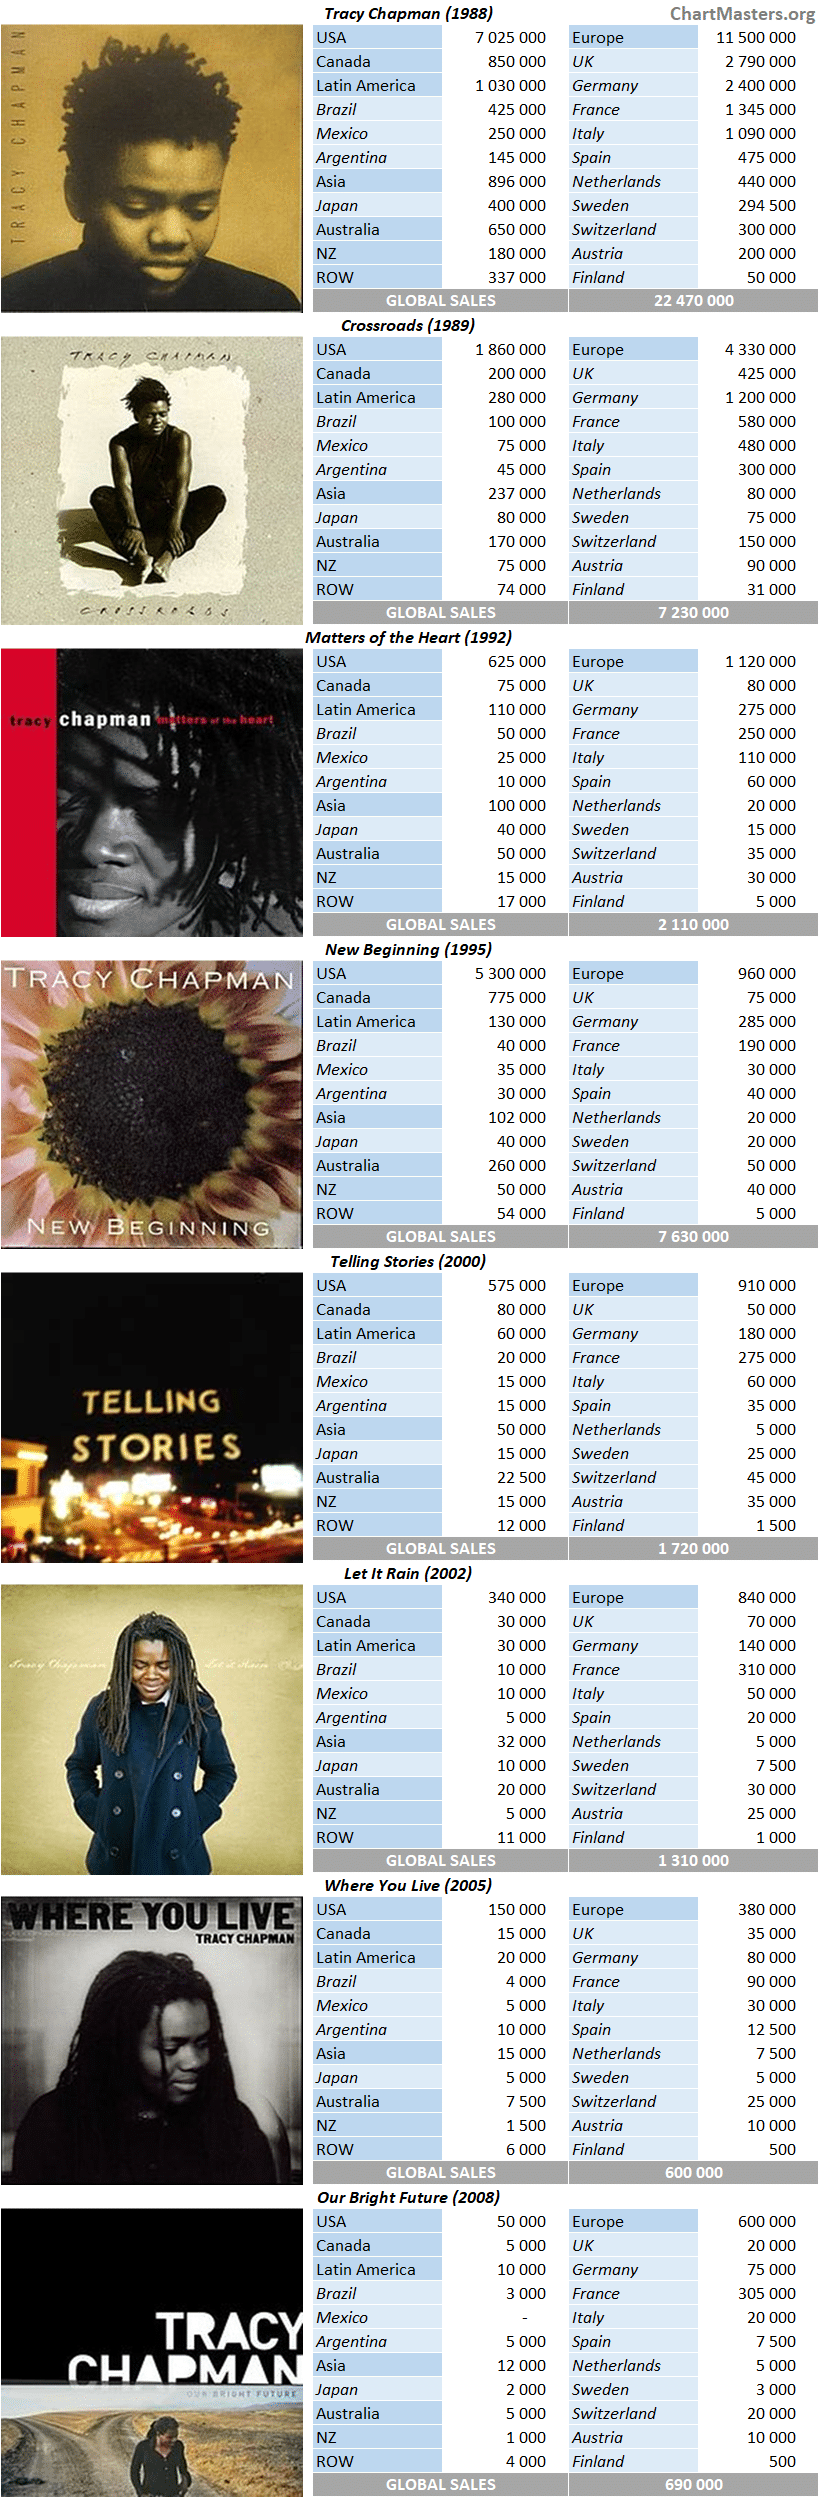 CSPC Tracy Chapman album sales breakdown